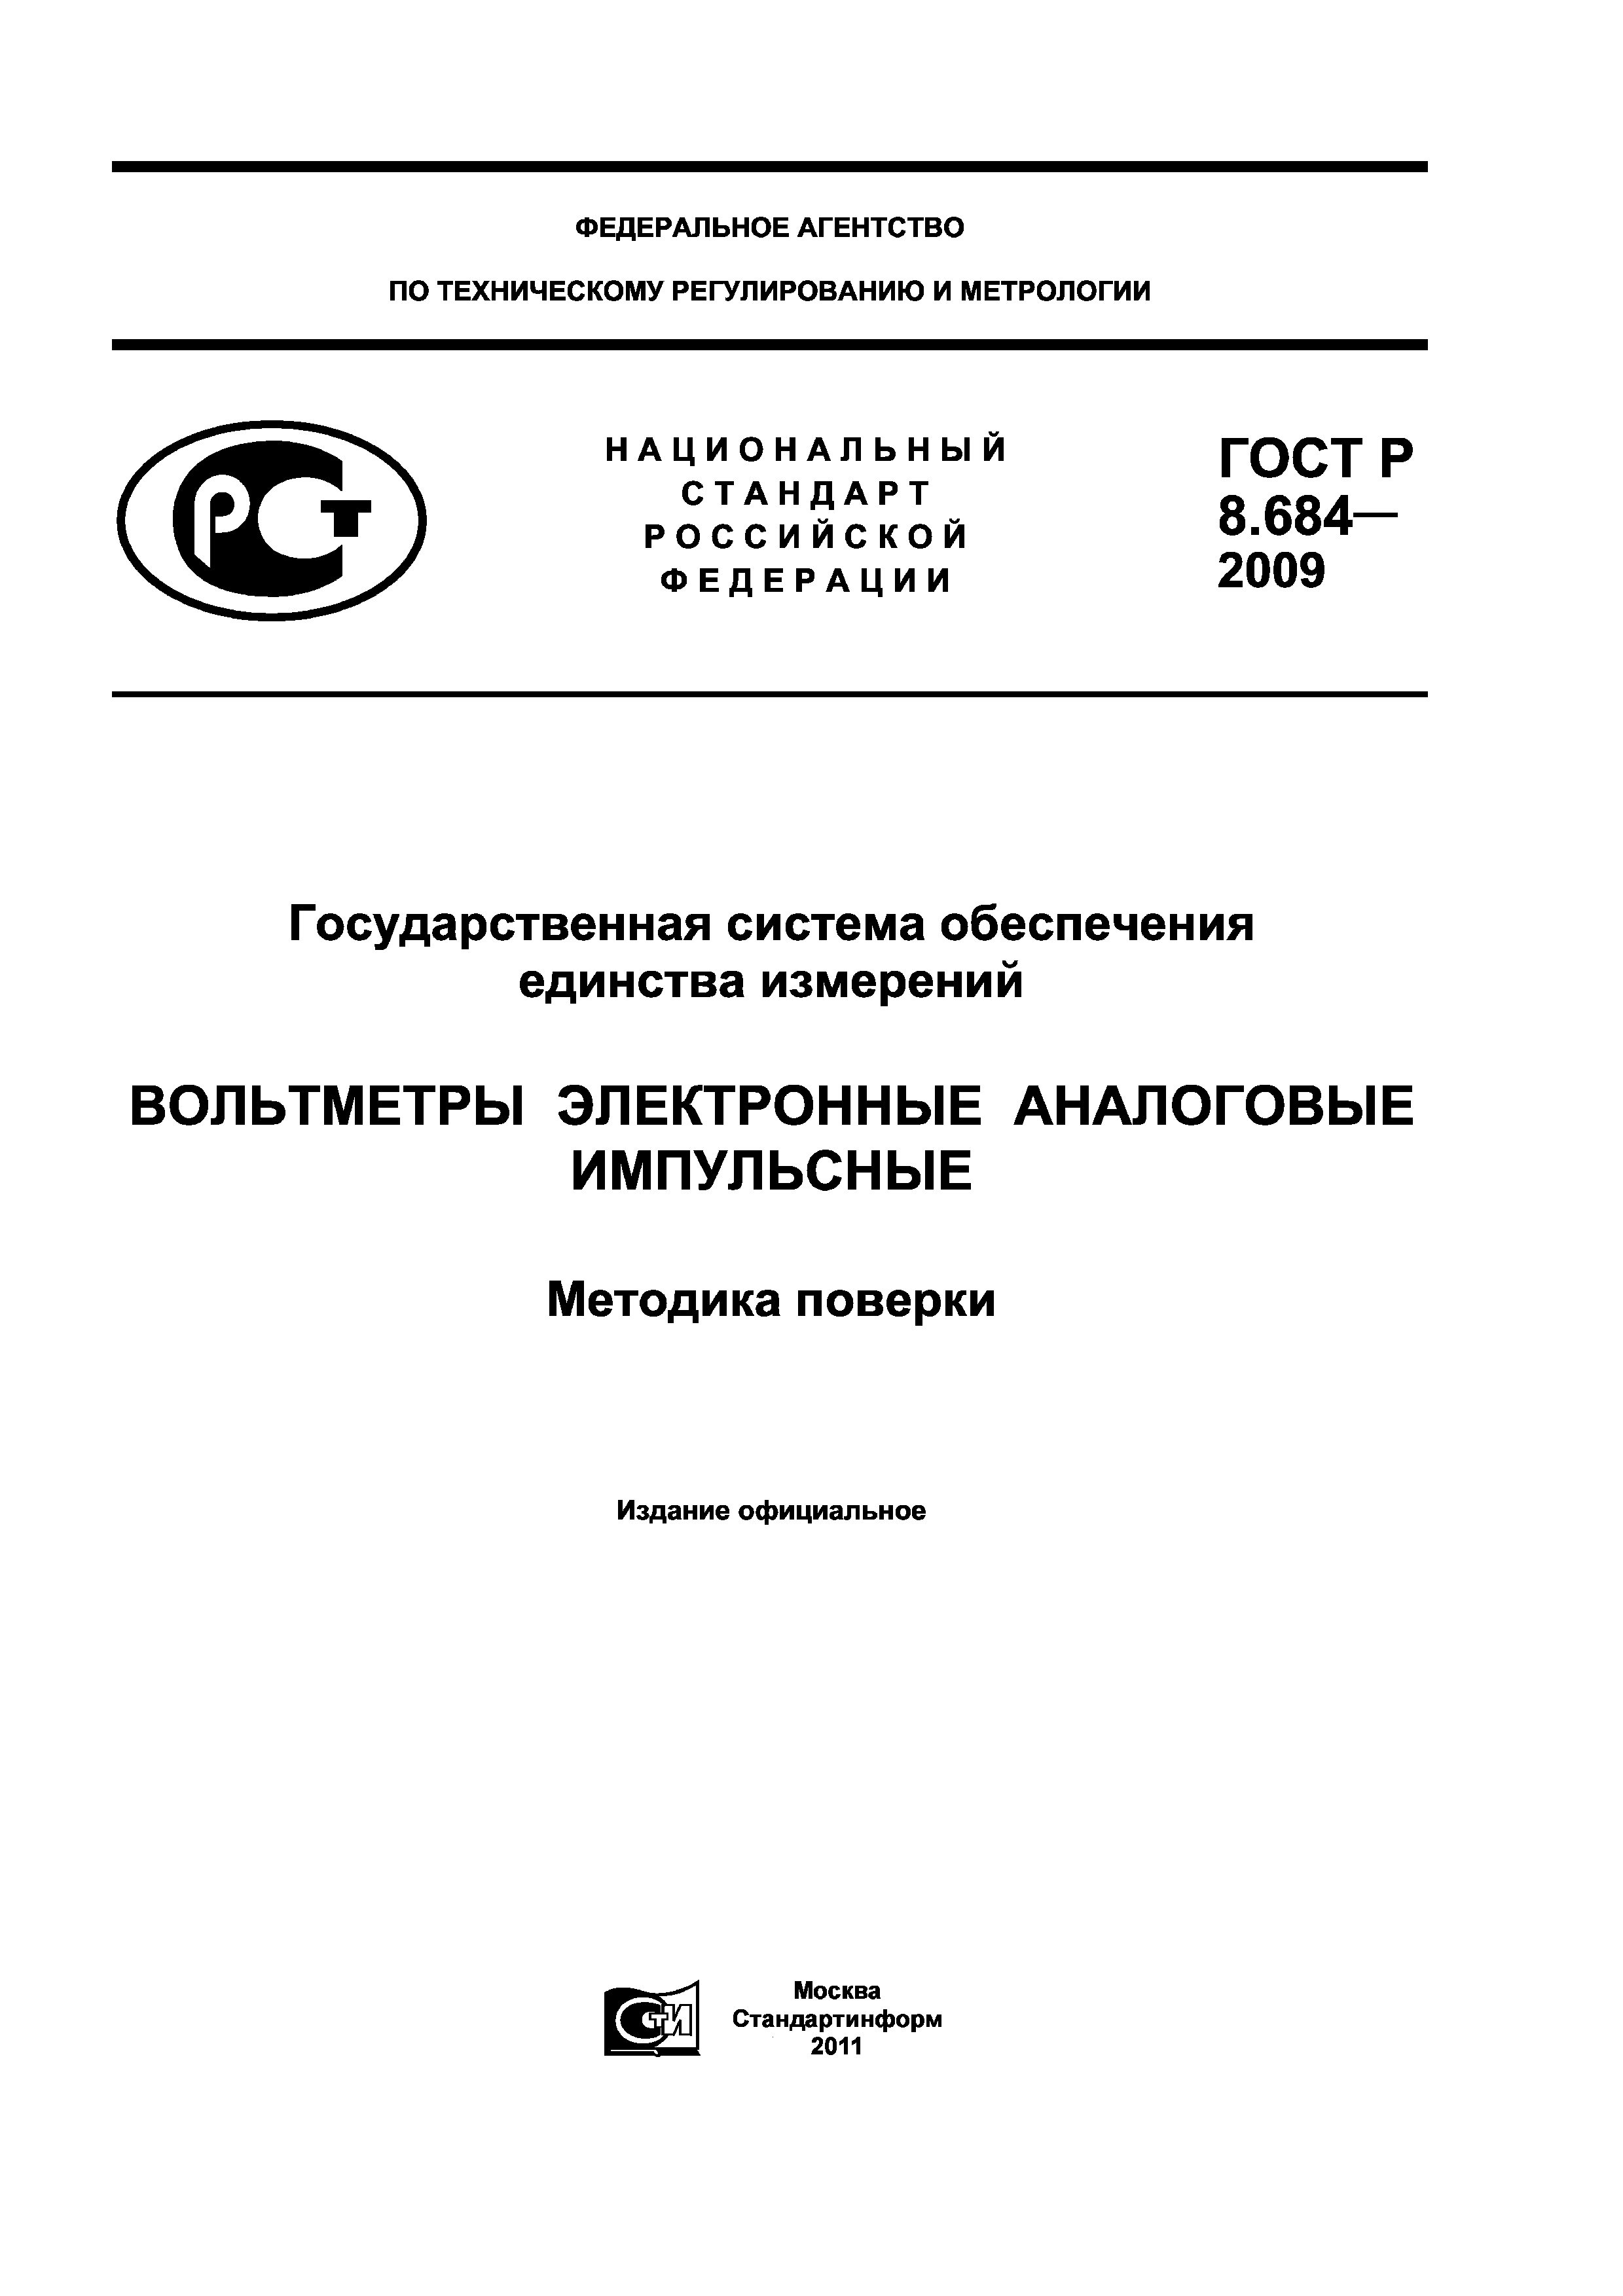 ГОСТ Р 8.684-2009